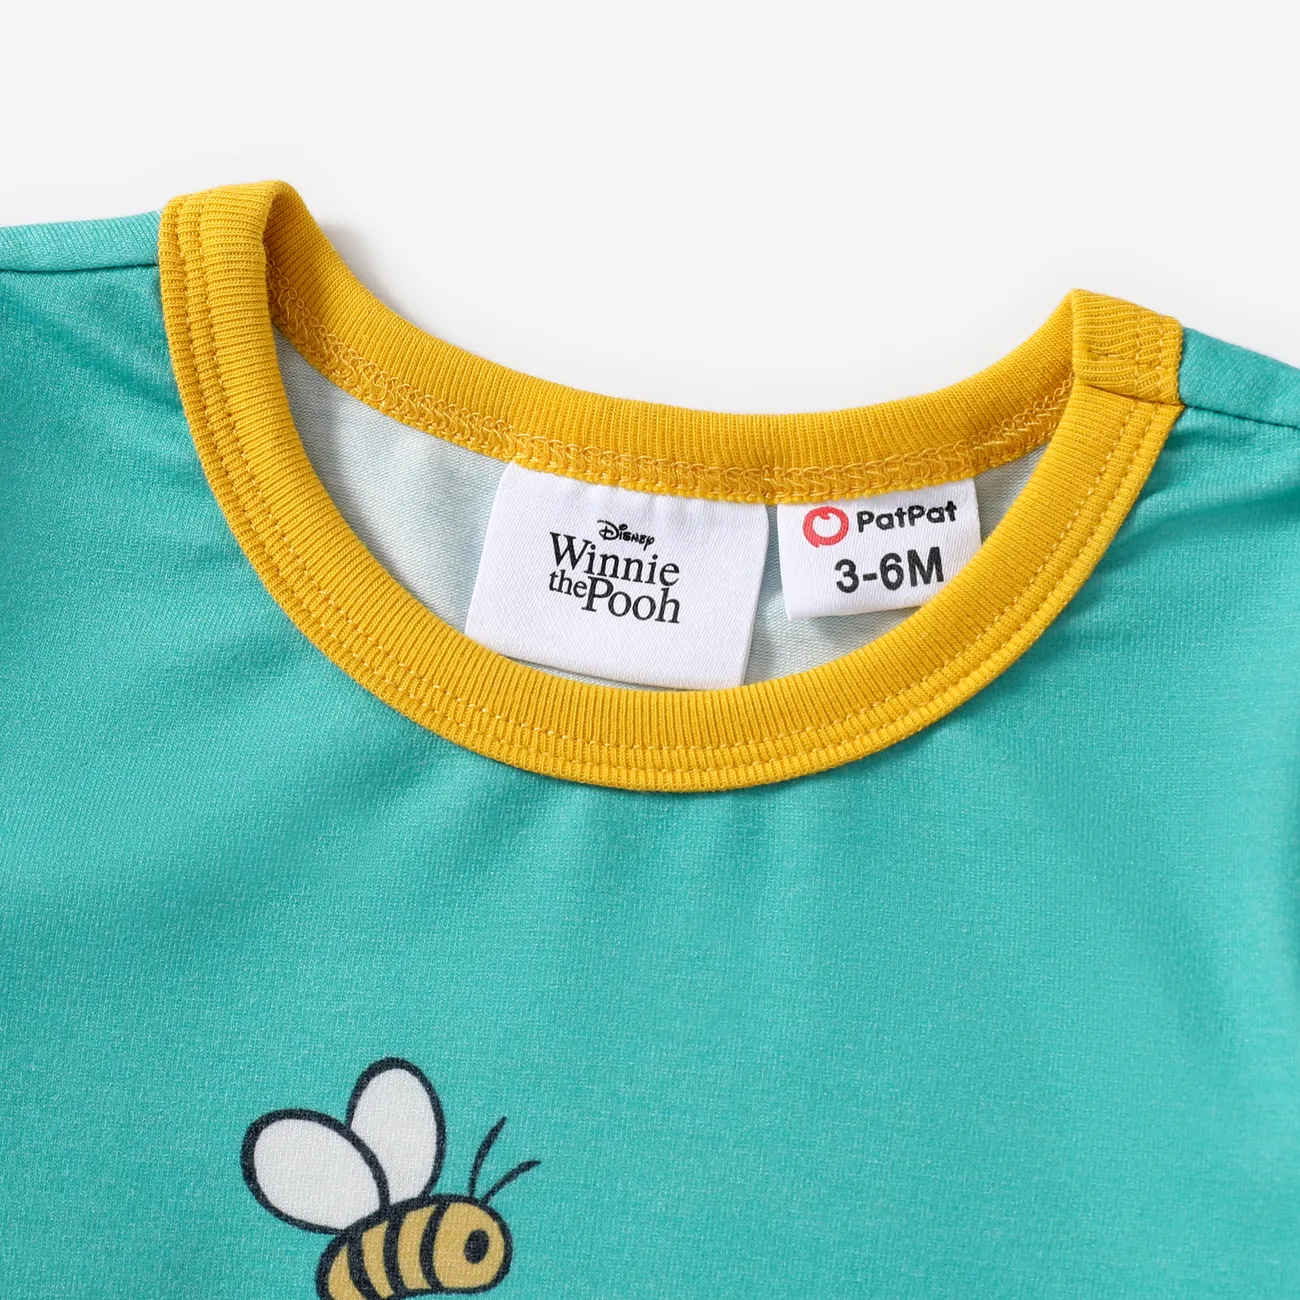 Disney Winnie the Pooh Baby Girls/Boys 1pc Naia™ Character Stripe Print Short-sleeve Romper  Green big image 1